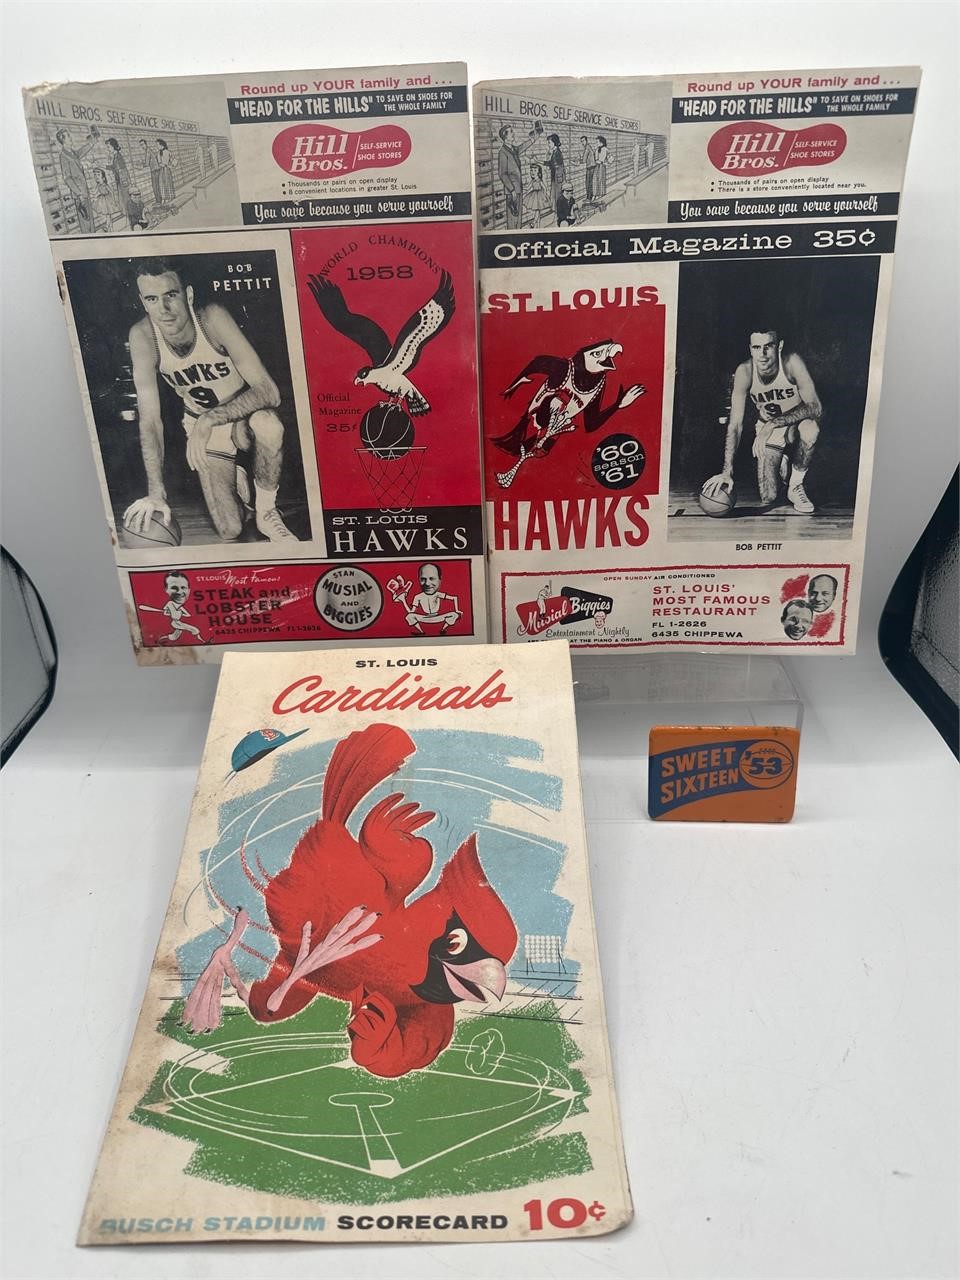 Vintage St. Louis Cardinals and Hawks scorecard